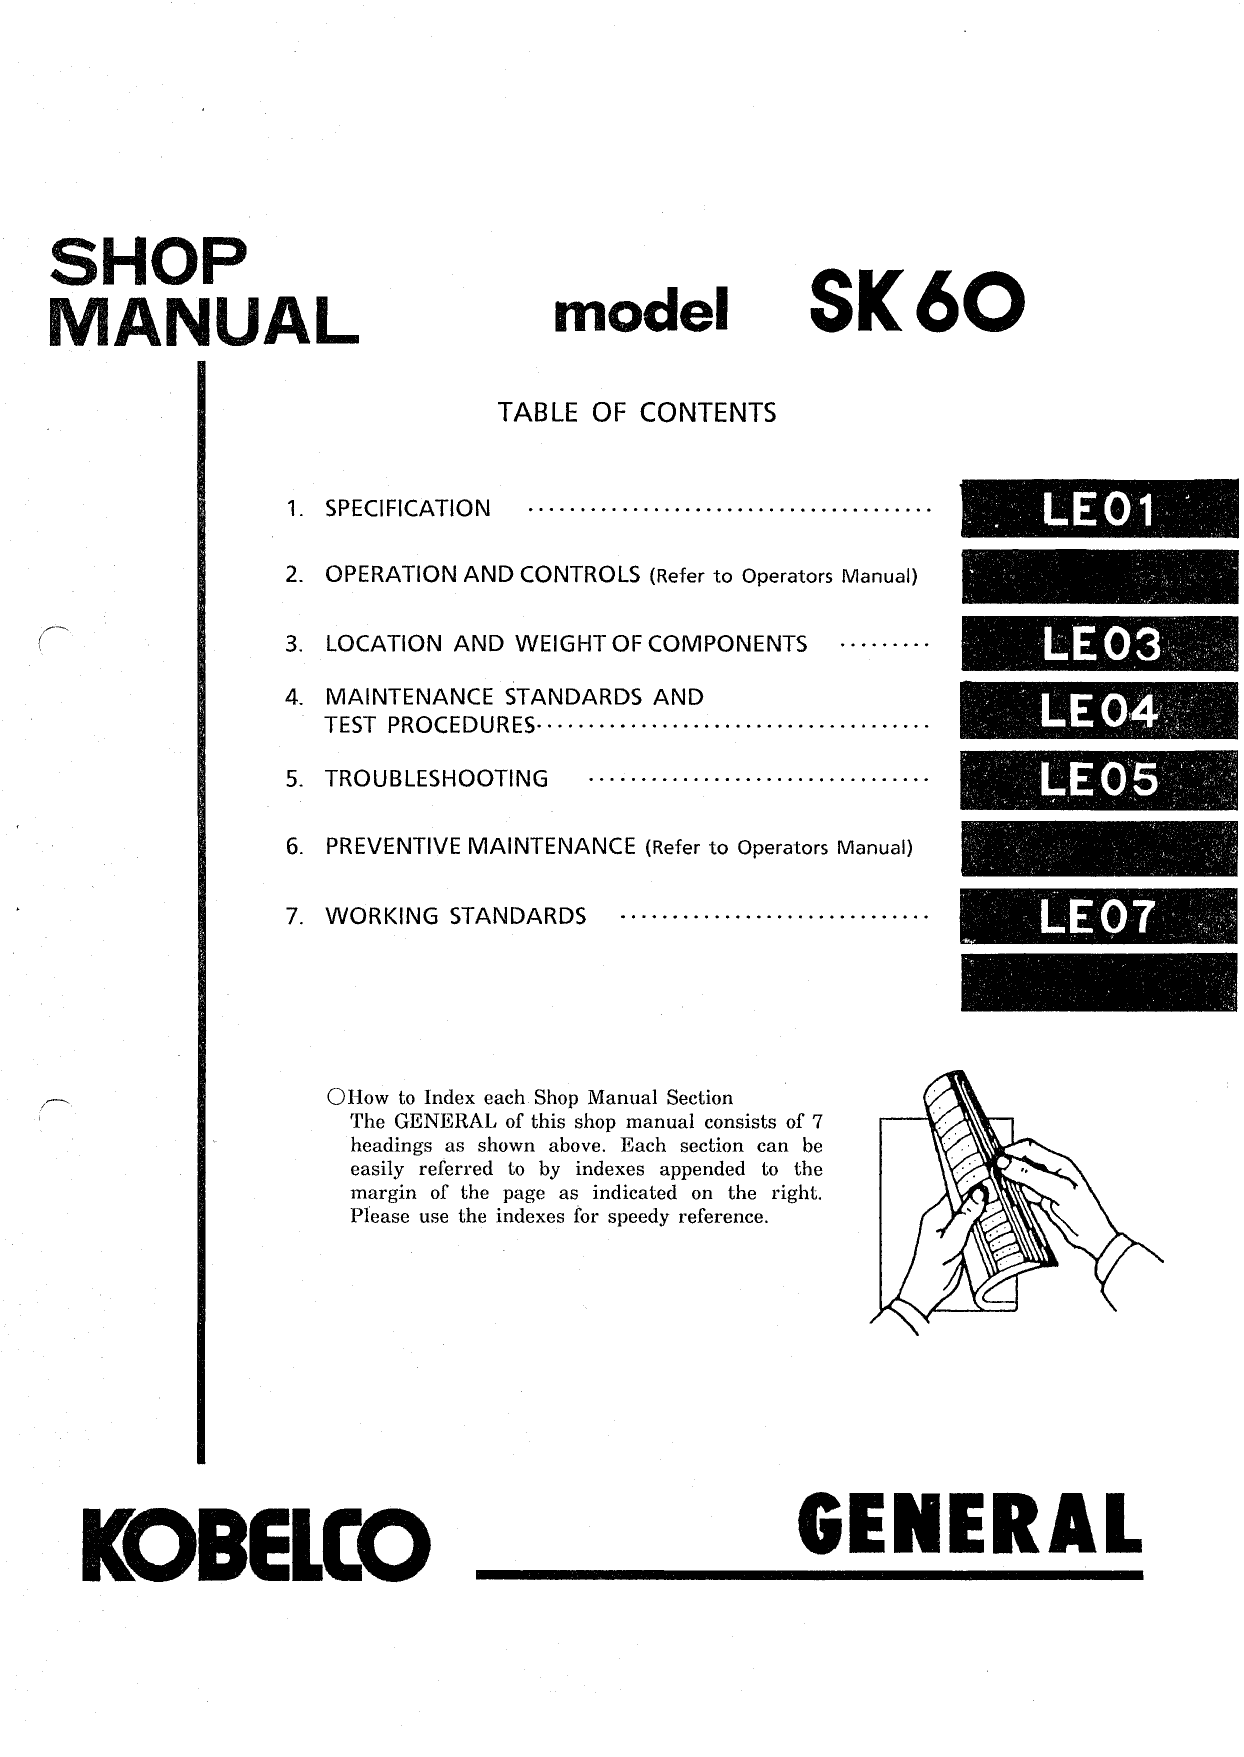 Kobelco SK60 compact excavator shop manual Preview image 4